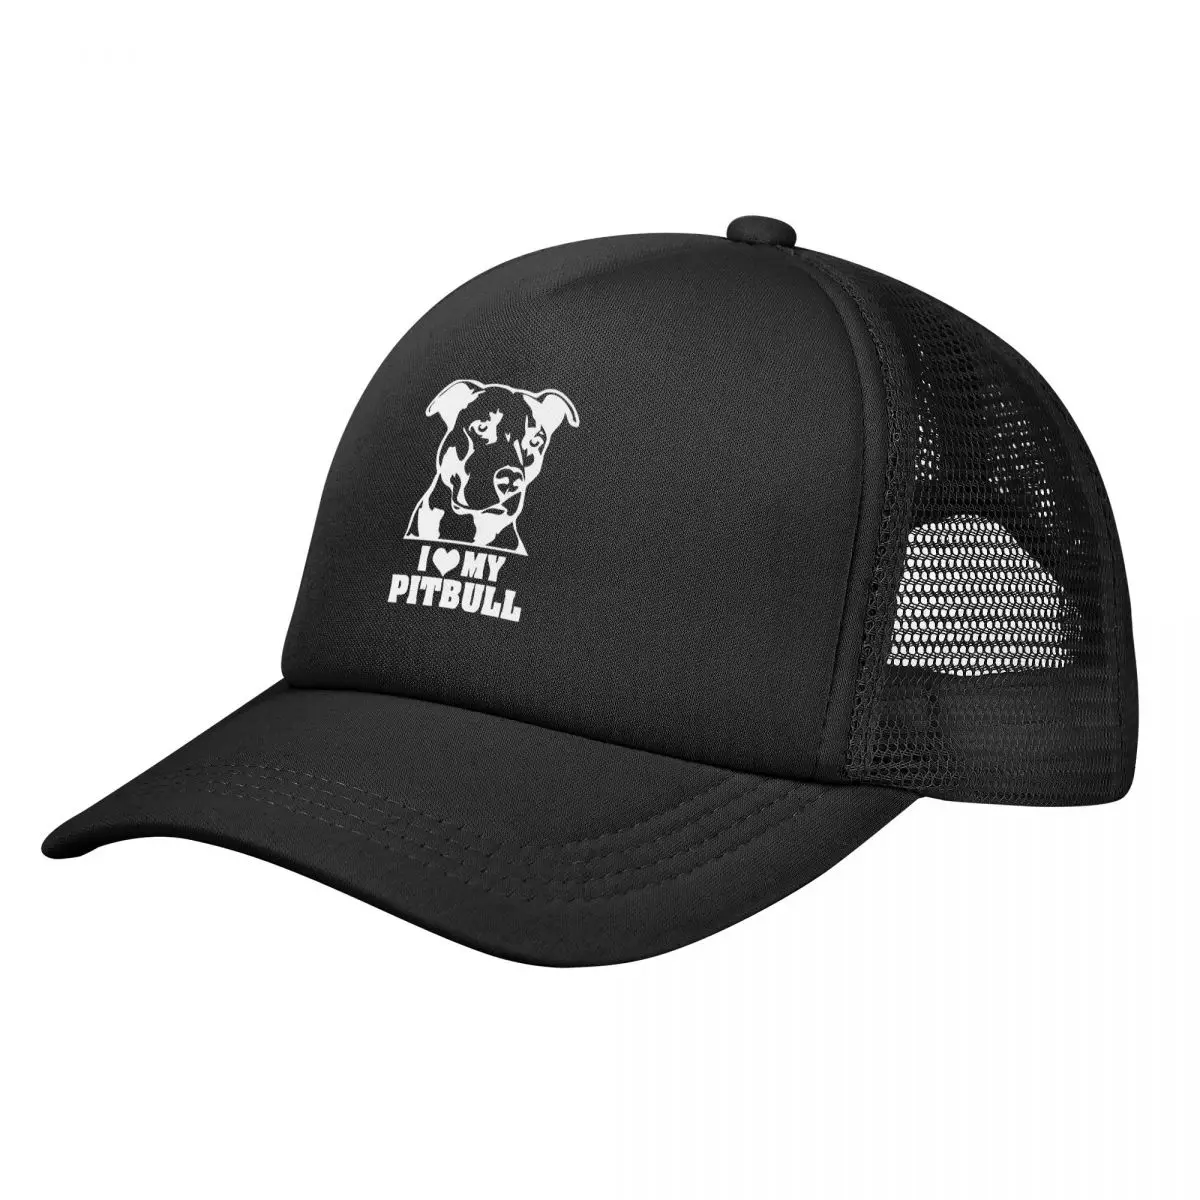 

Don T Judge Me Original Adjustable Mesh Trucker Hat for Men and Women